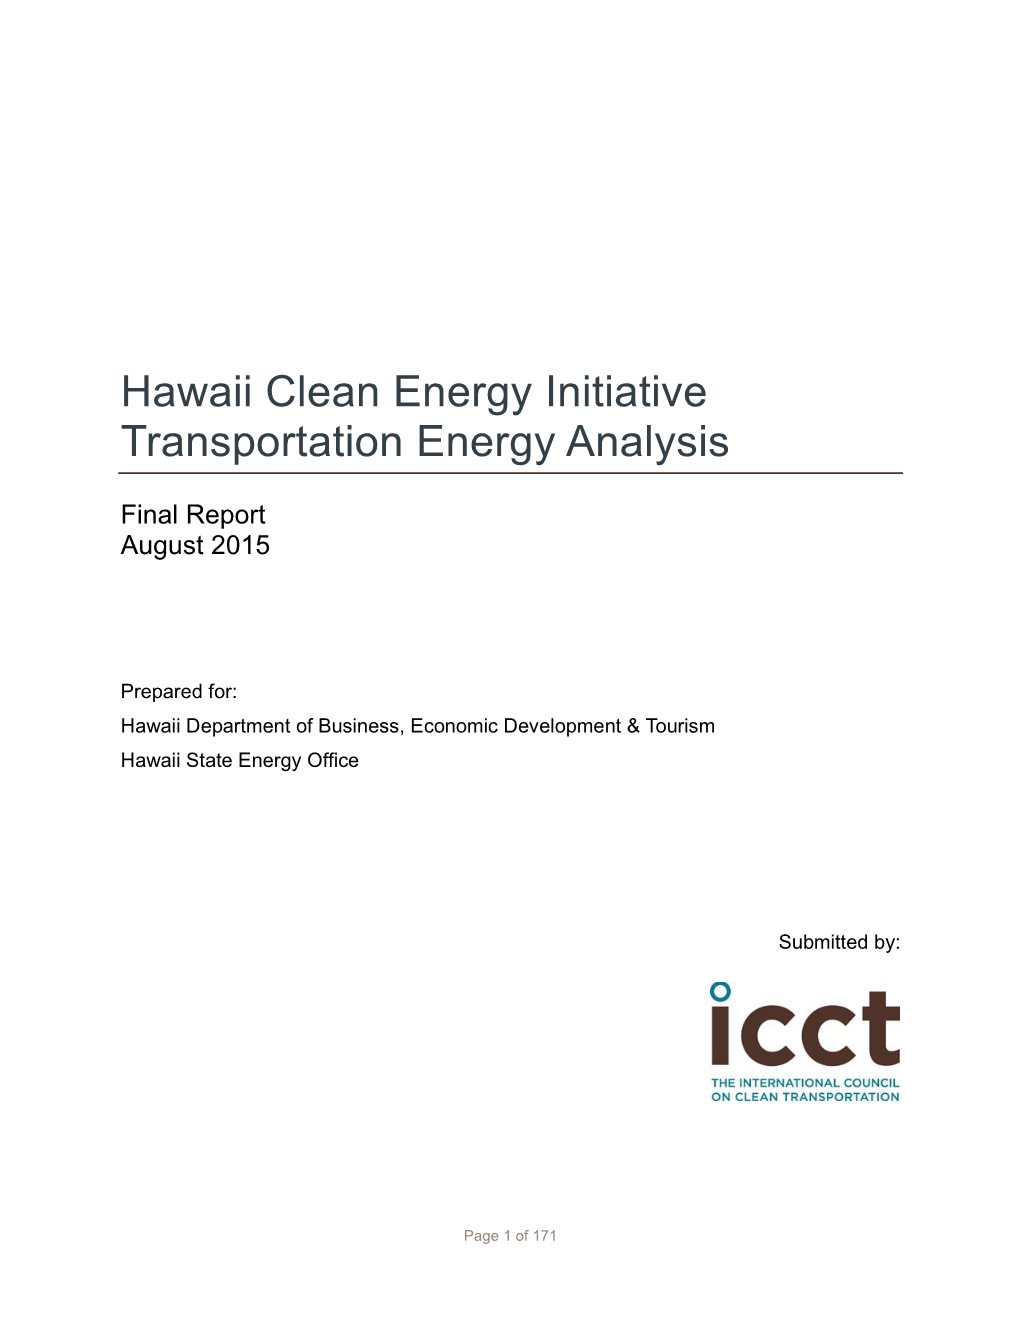 Hawaii Clean Energy Initiative Transportation Energy Analysis